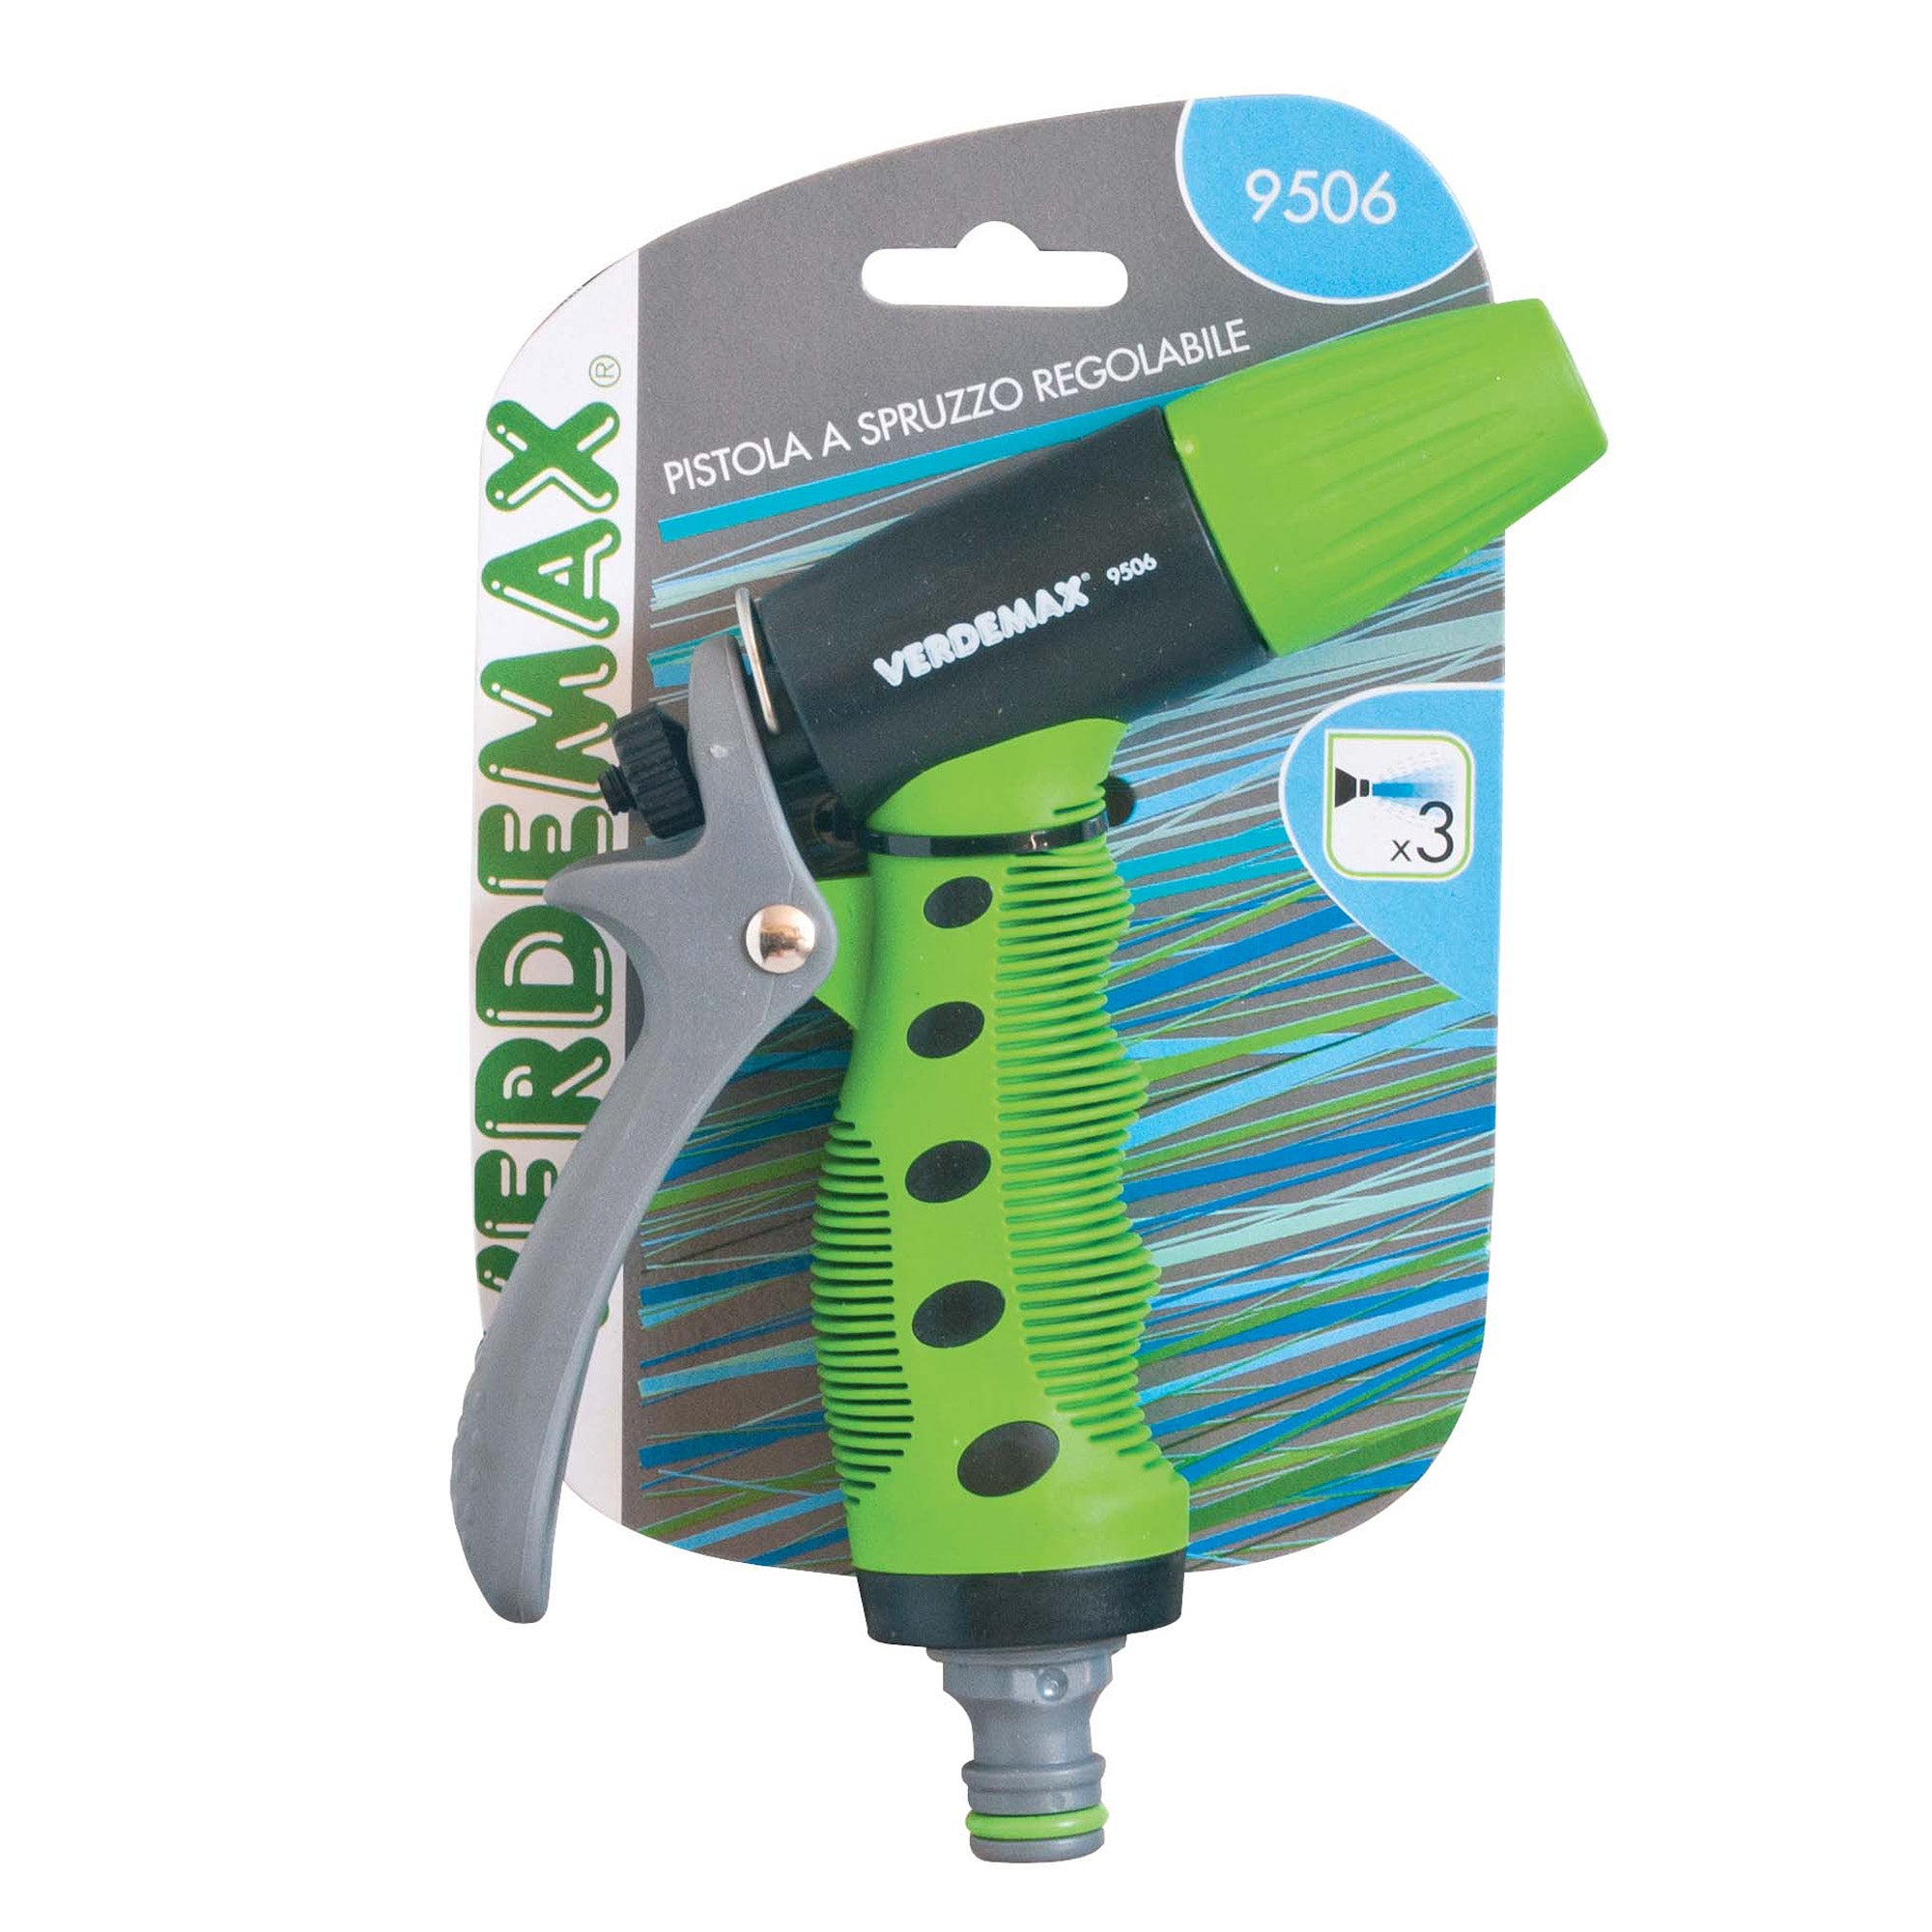 verdemax-pistola-irrigazione-plastica-spruzzo-regolabile